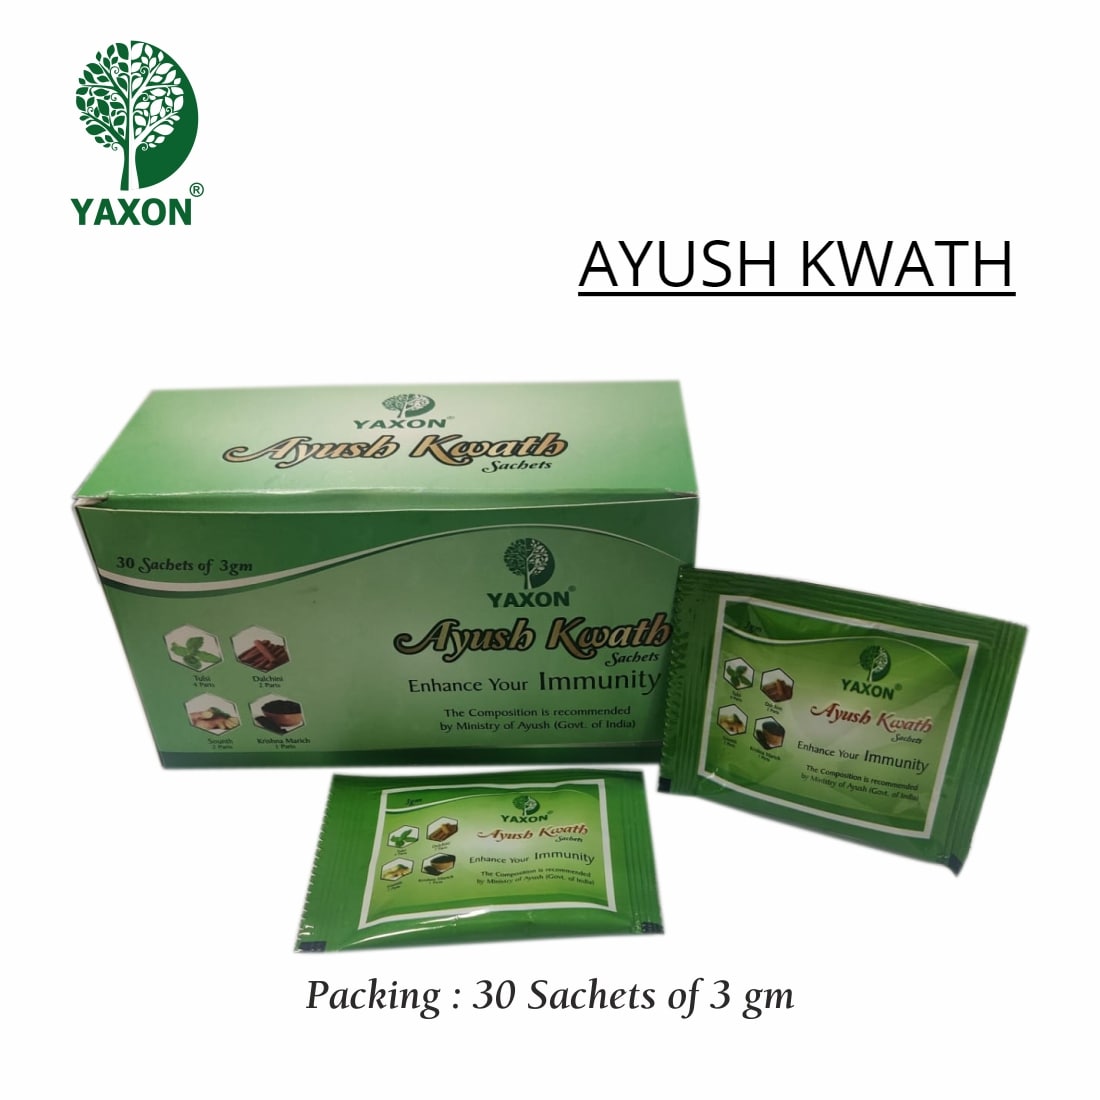 YAXON AYUSH KWATH 30 Sachet Box Pack